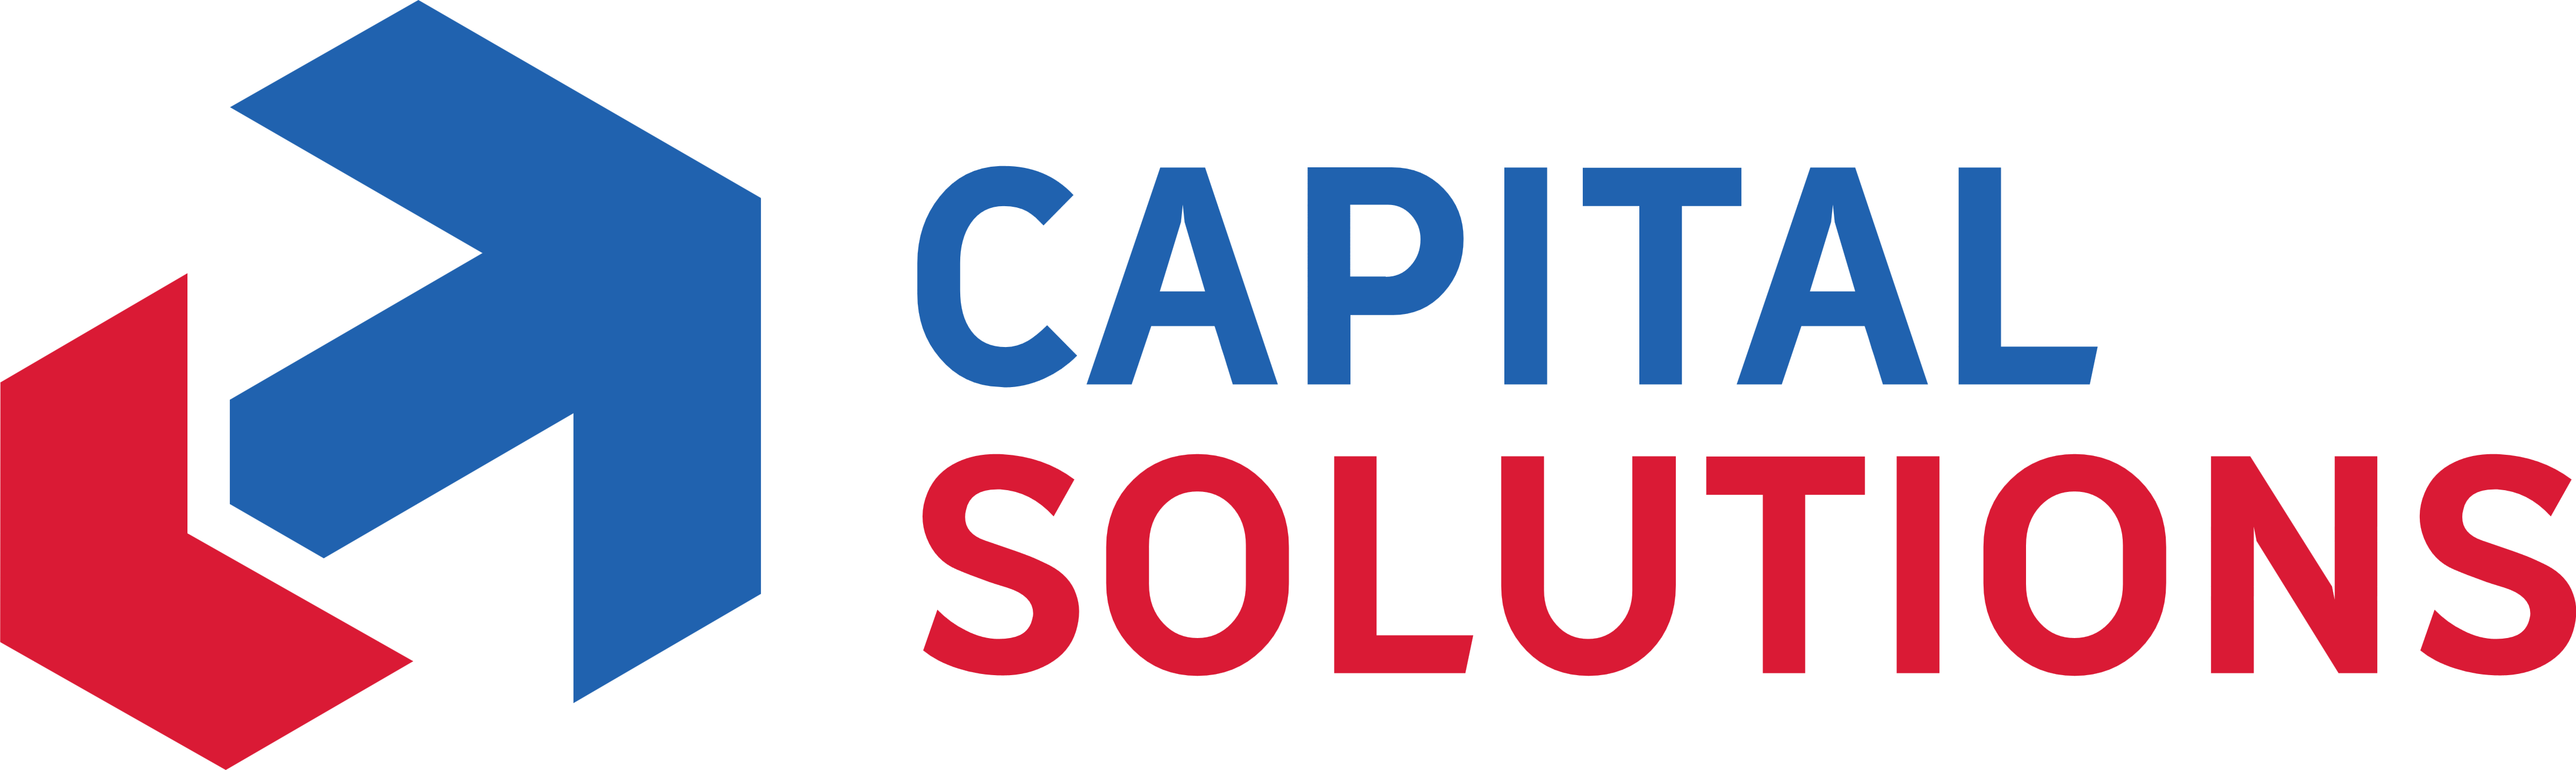 Capital Solutions – Logos Download